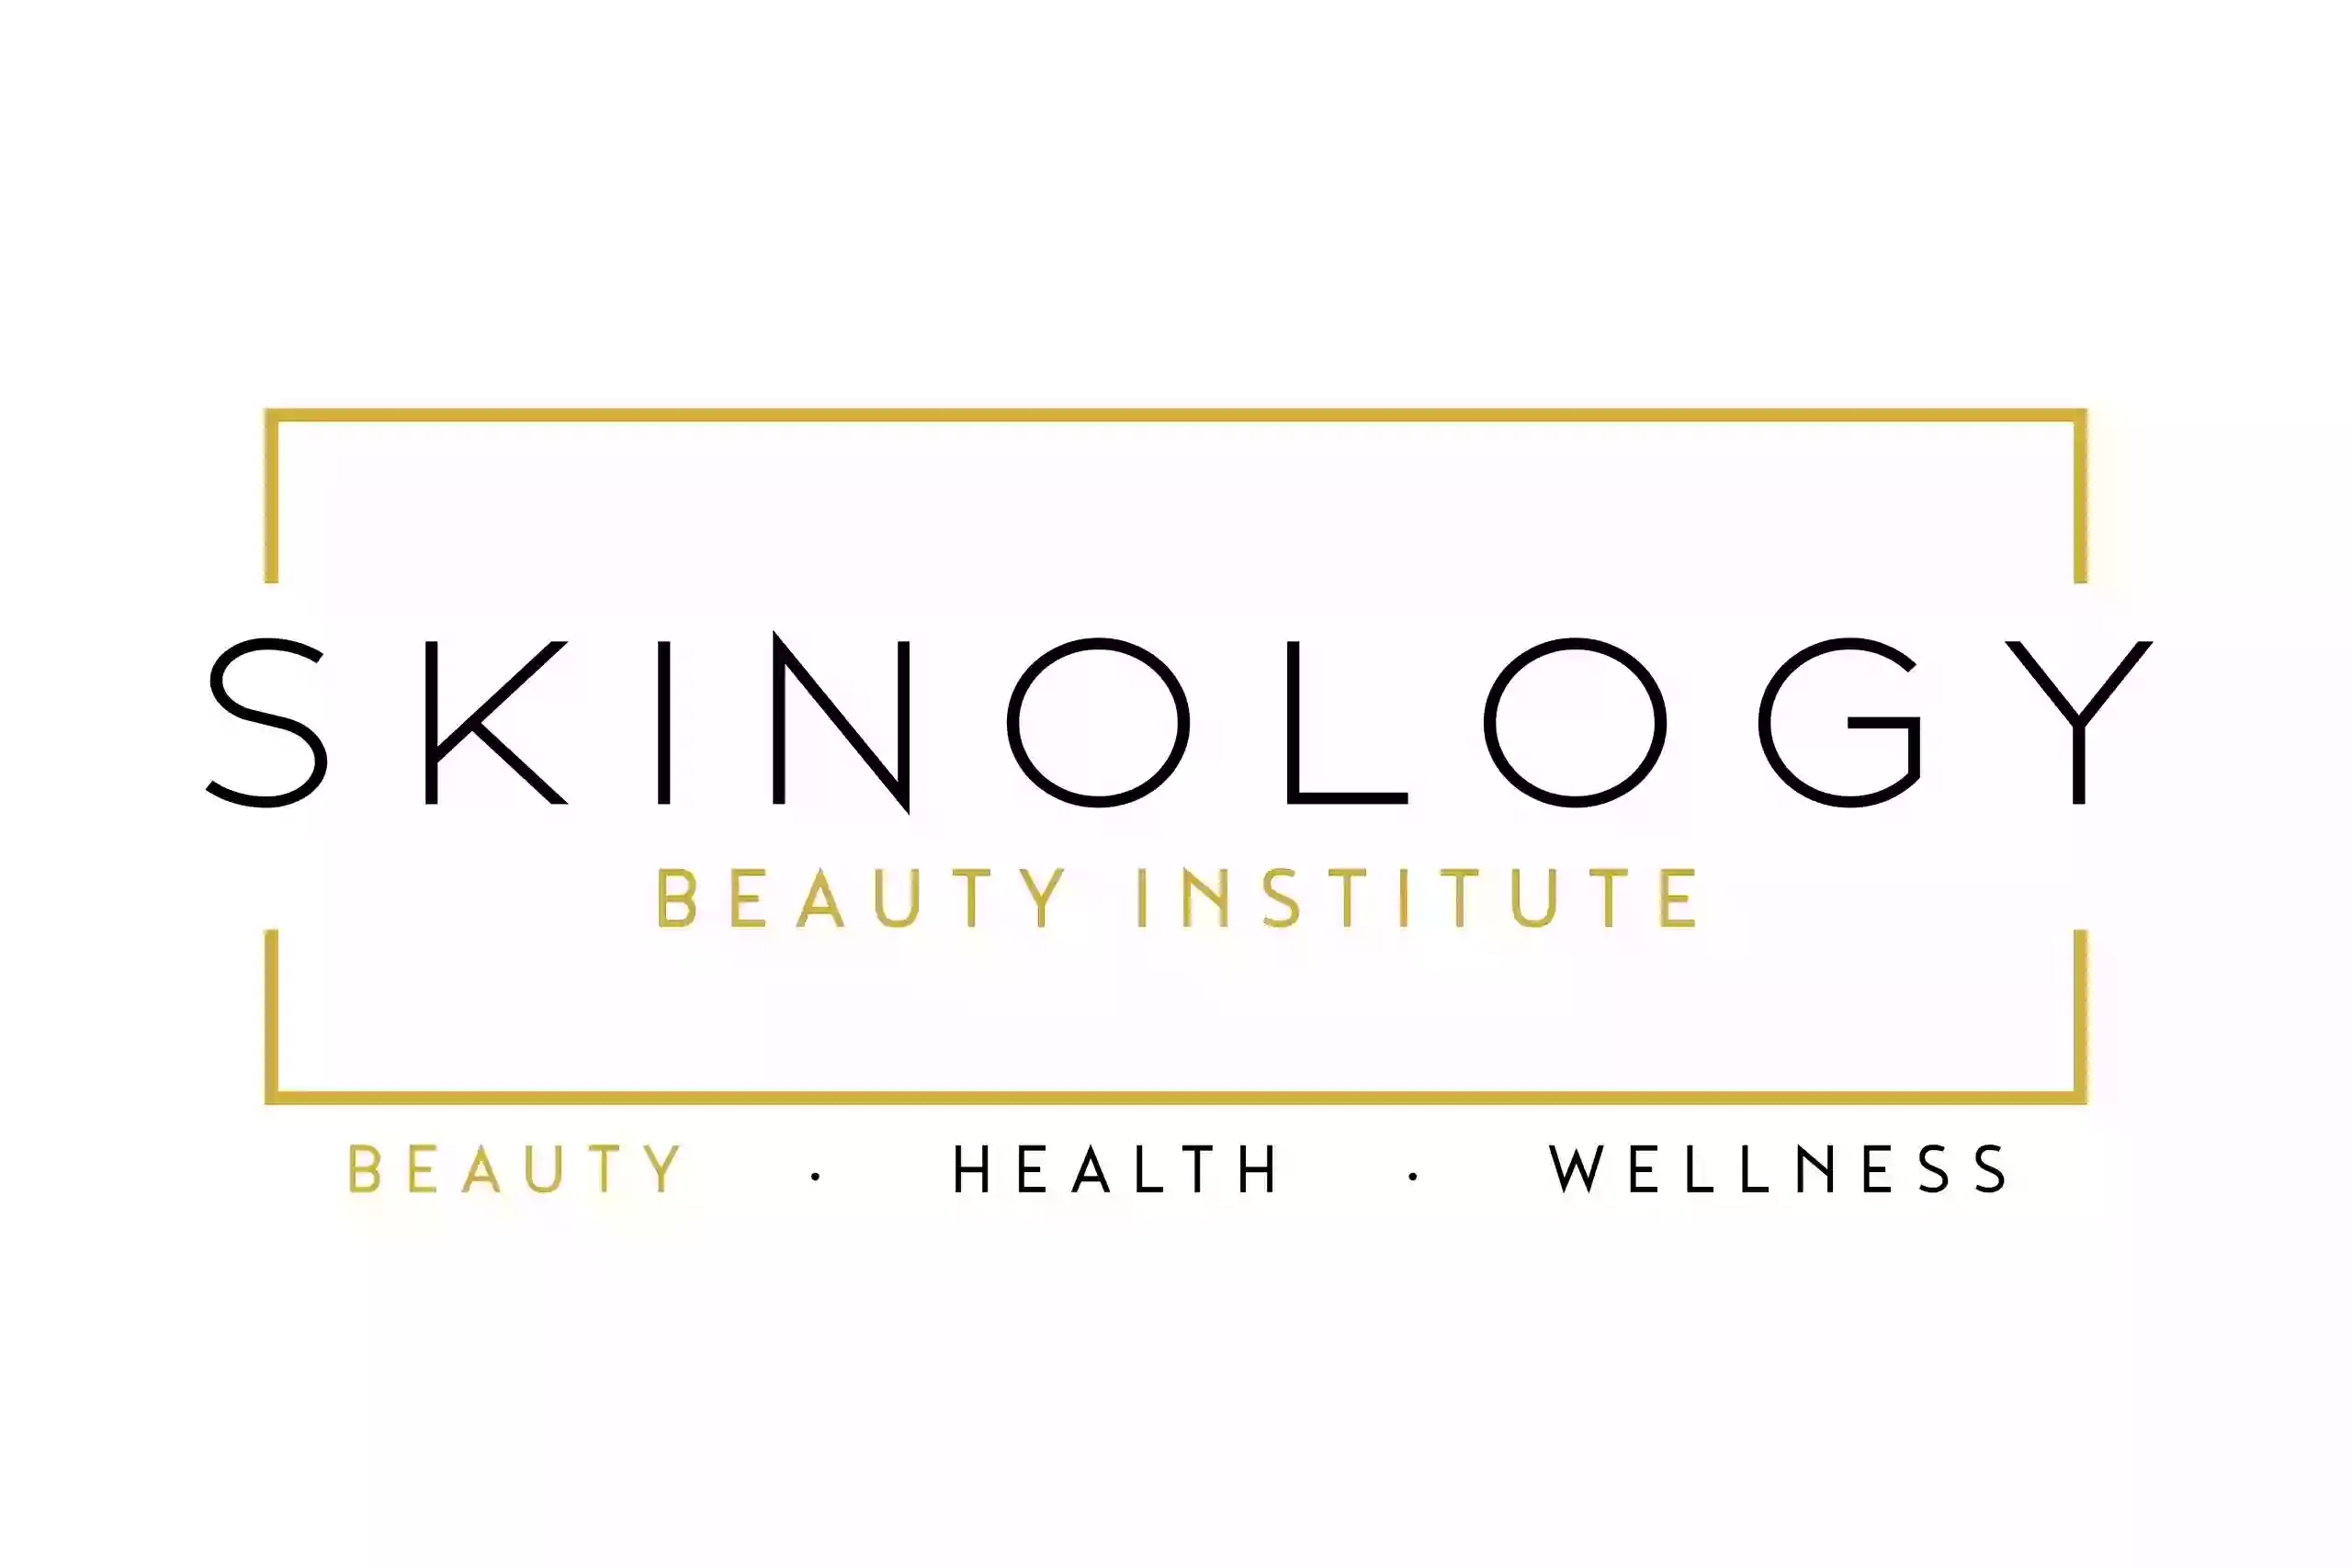 Skinology Beauty Institute